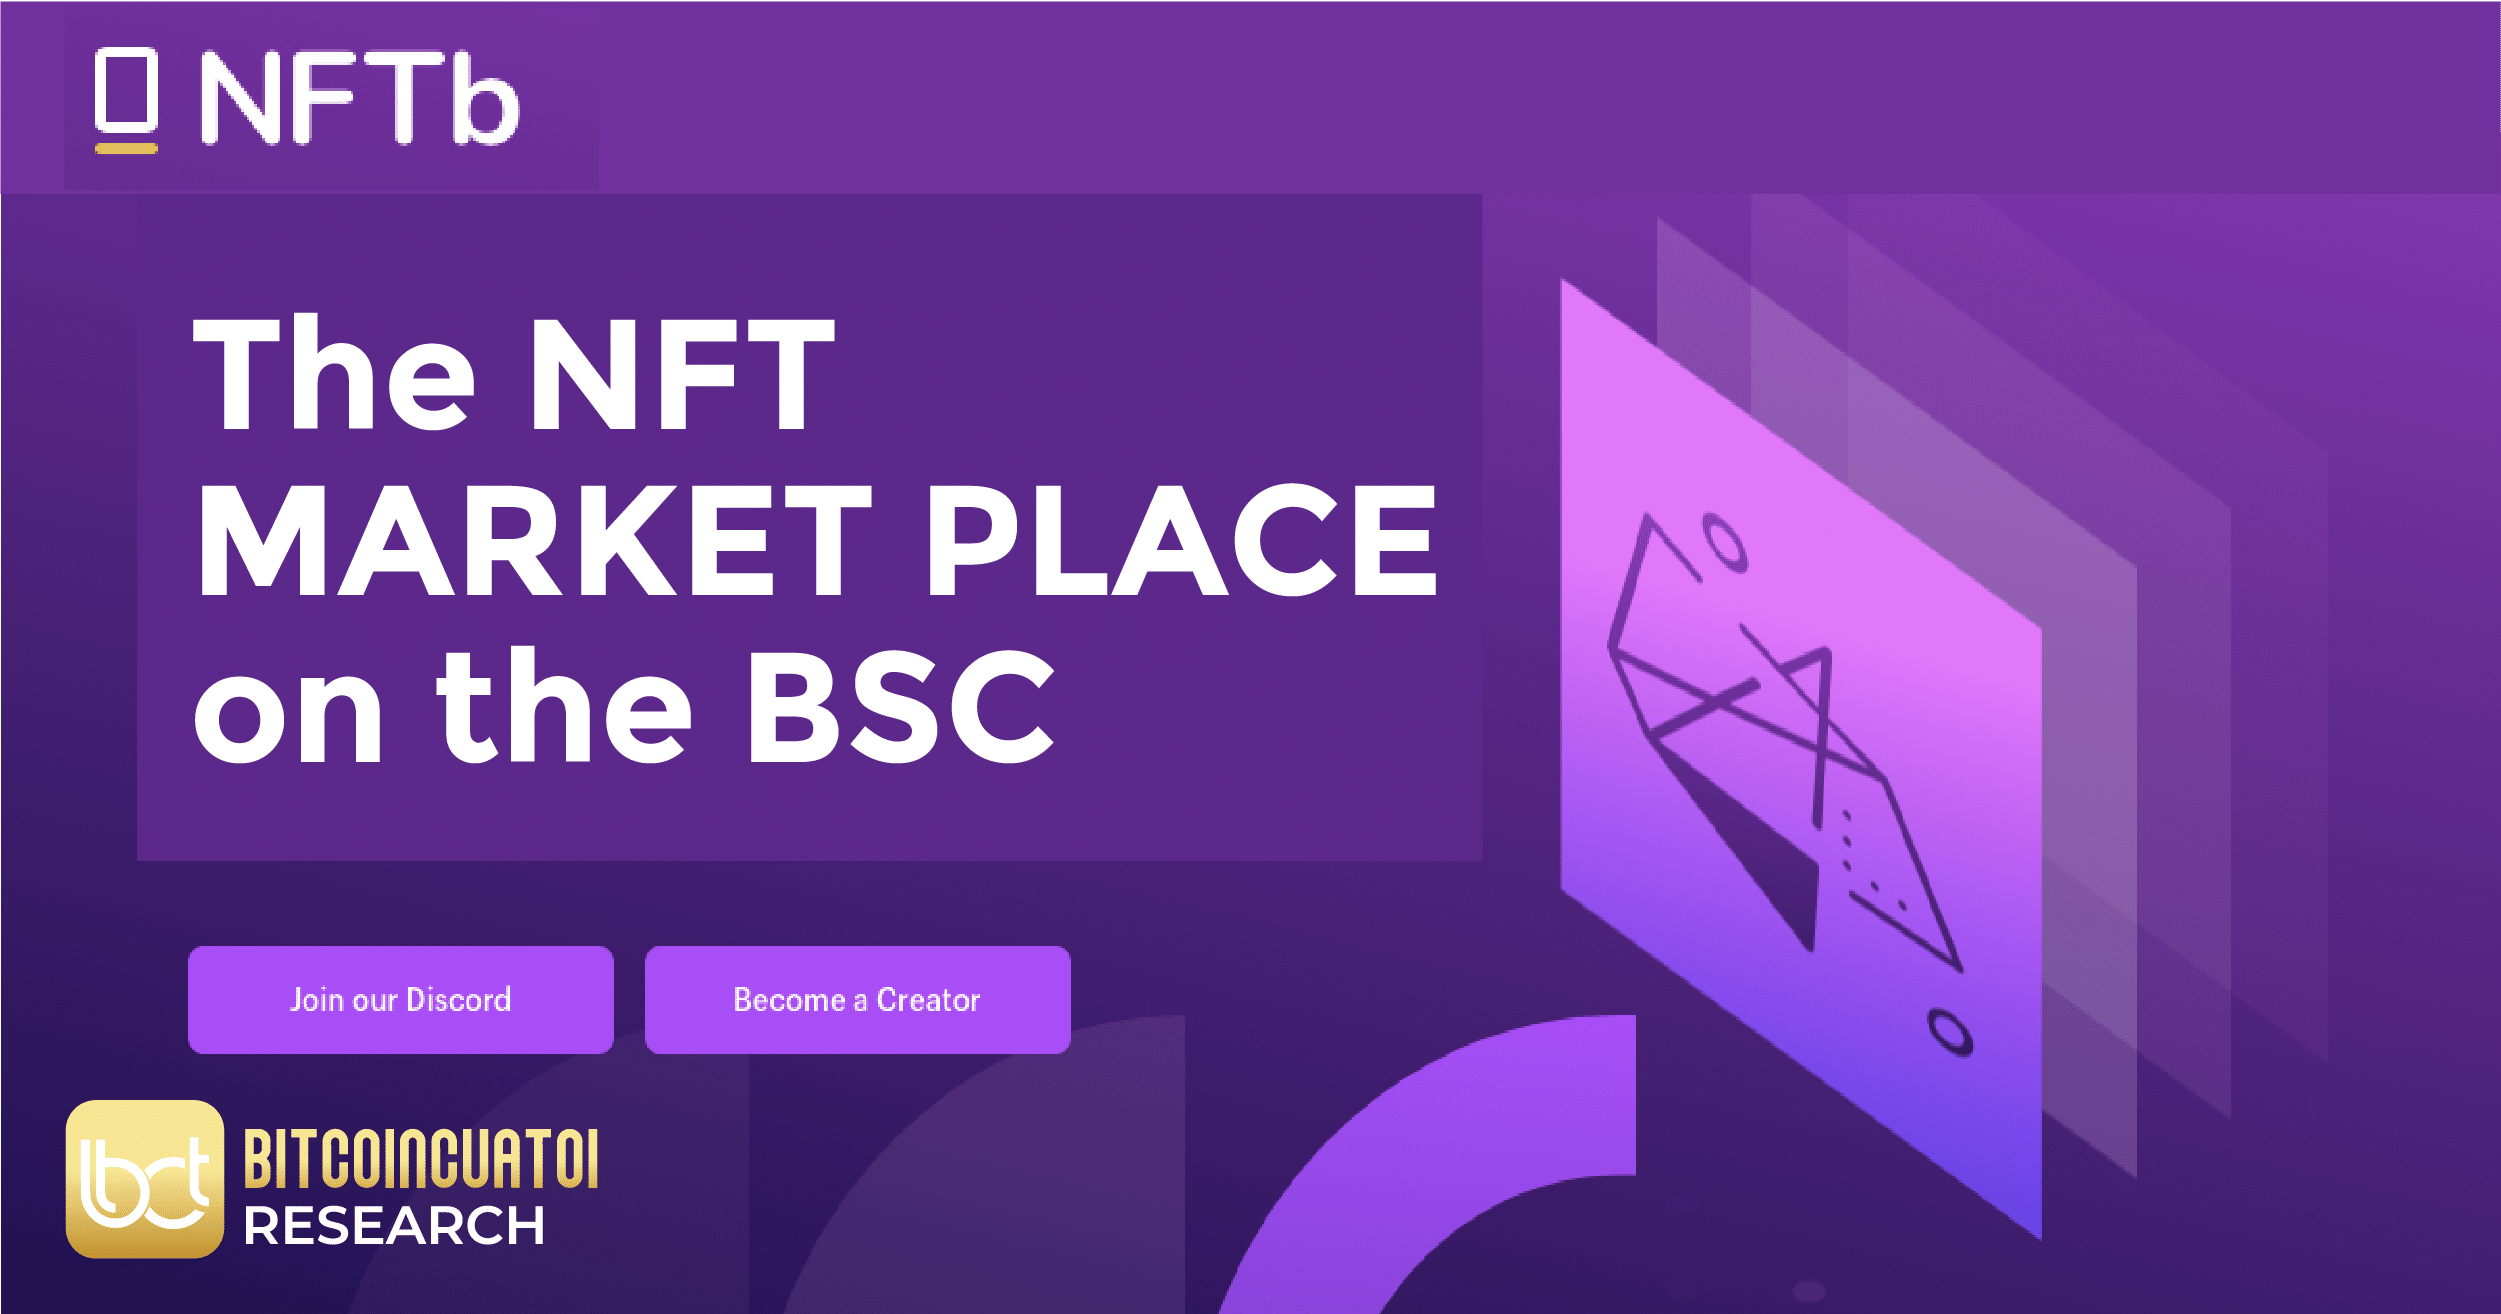 nft marketplace binance smart chain